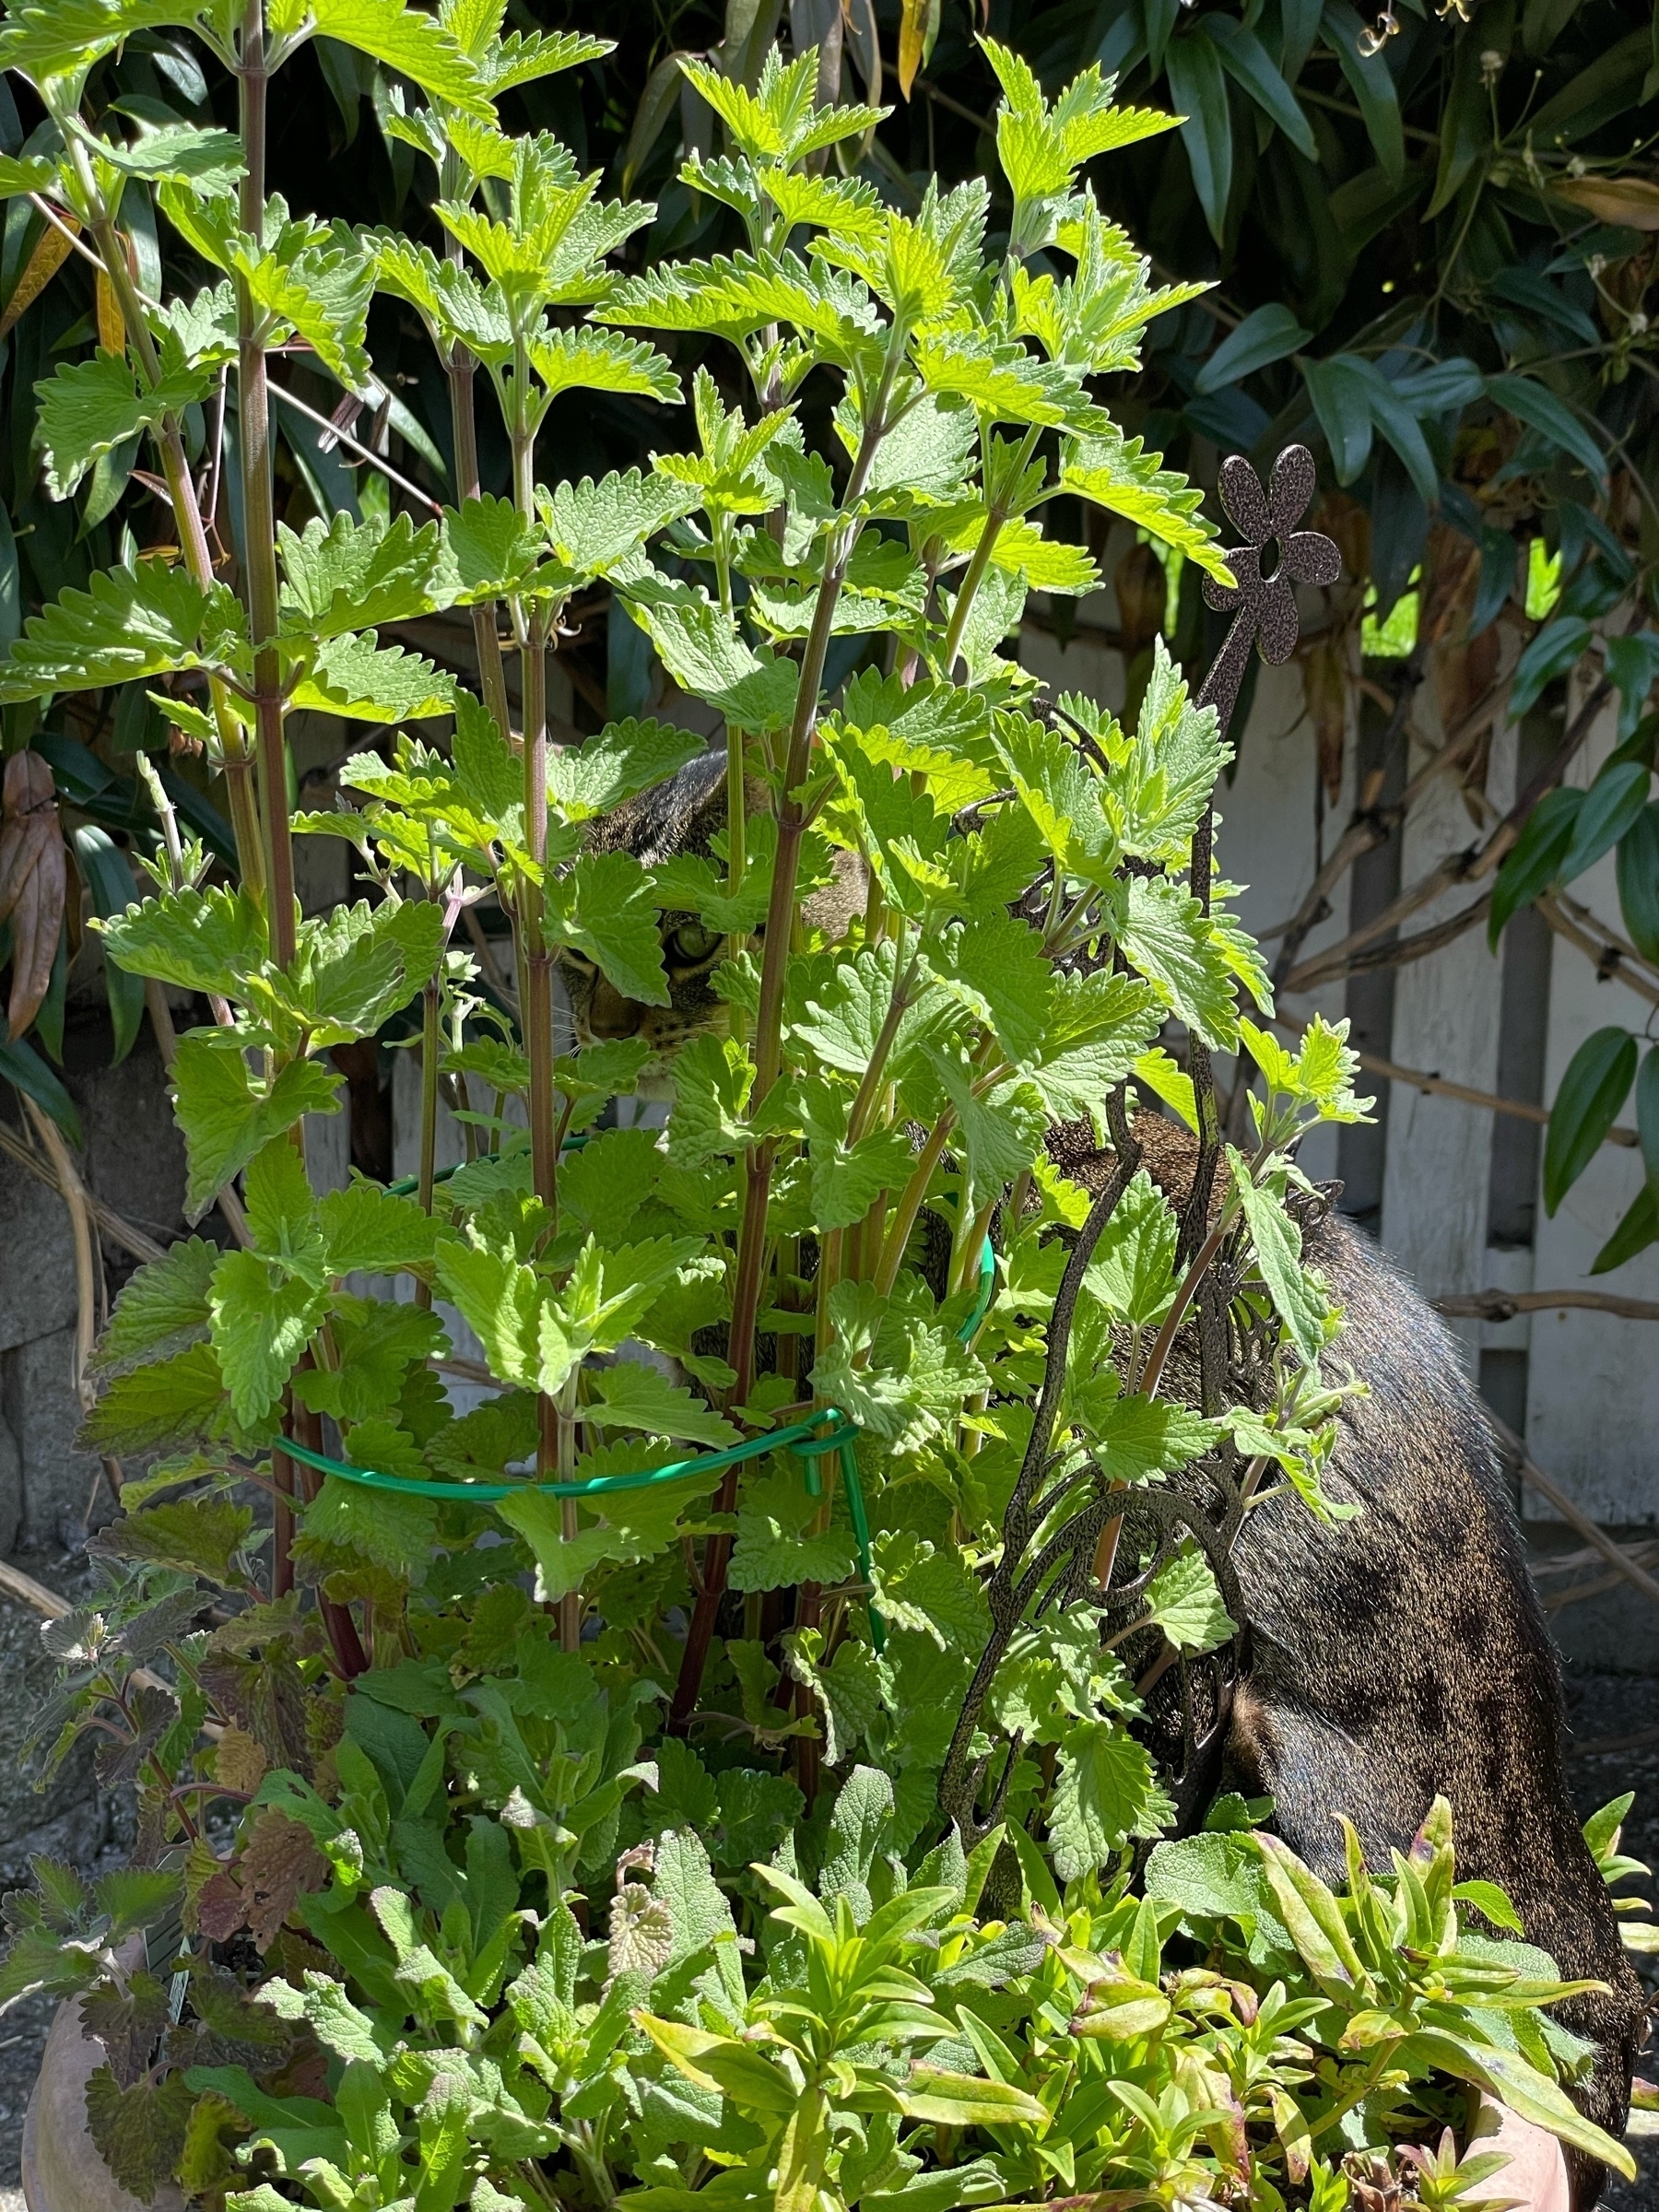 Brown tabby cat behind catnip plant